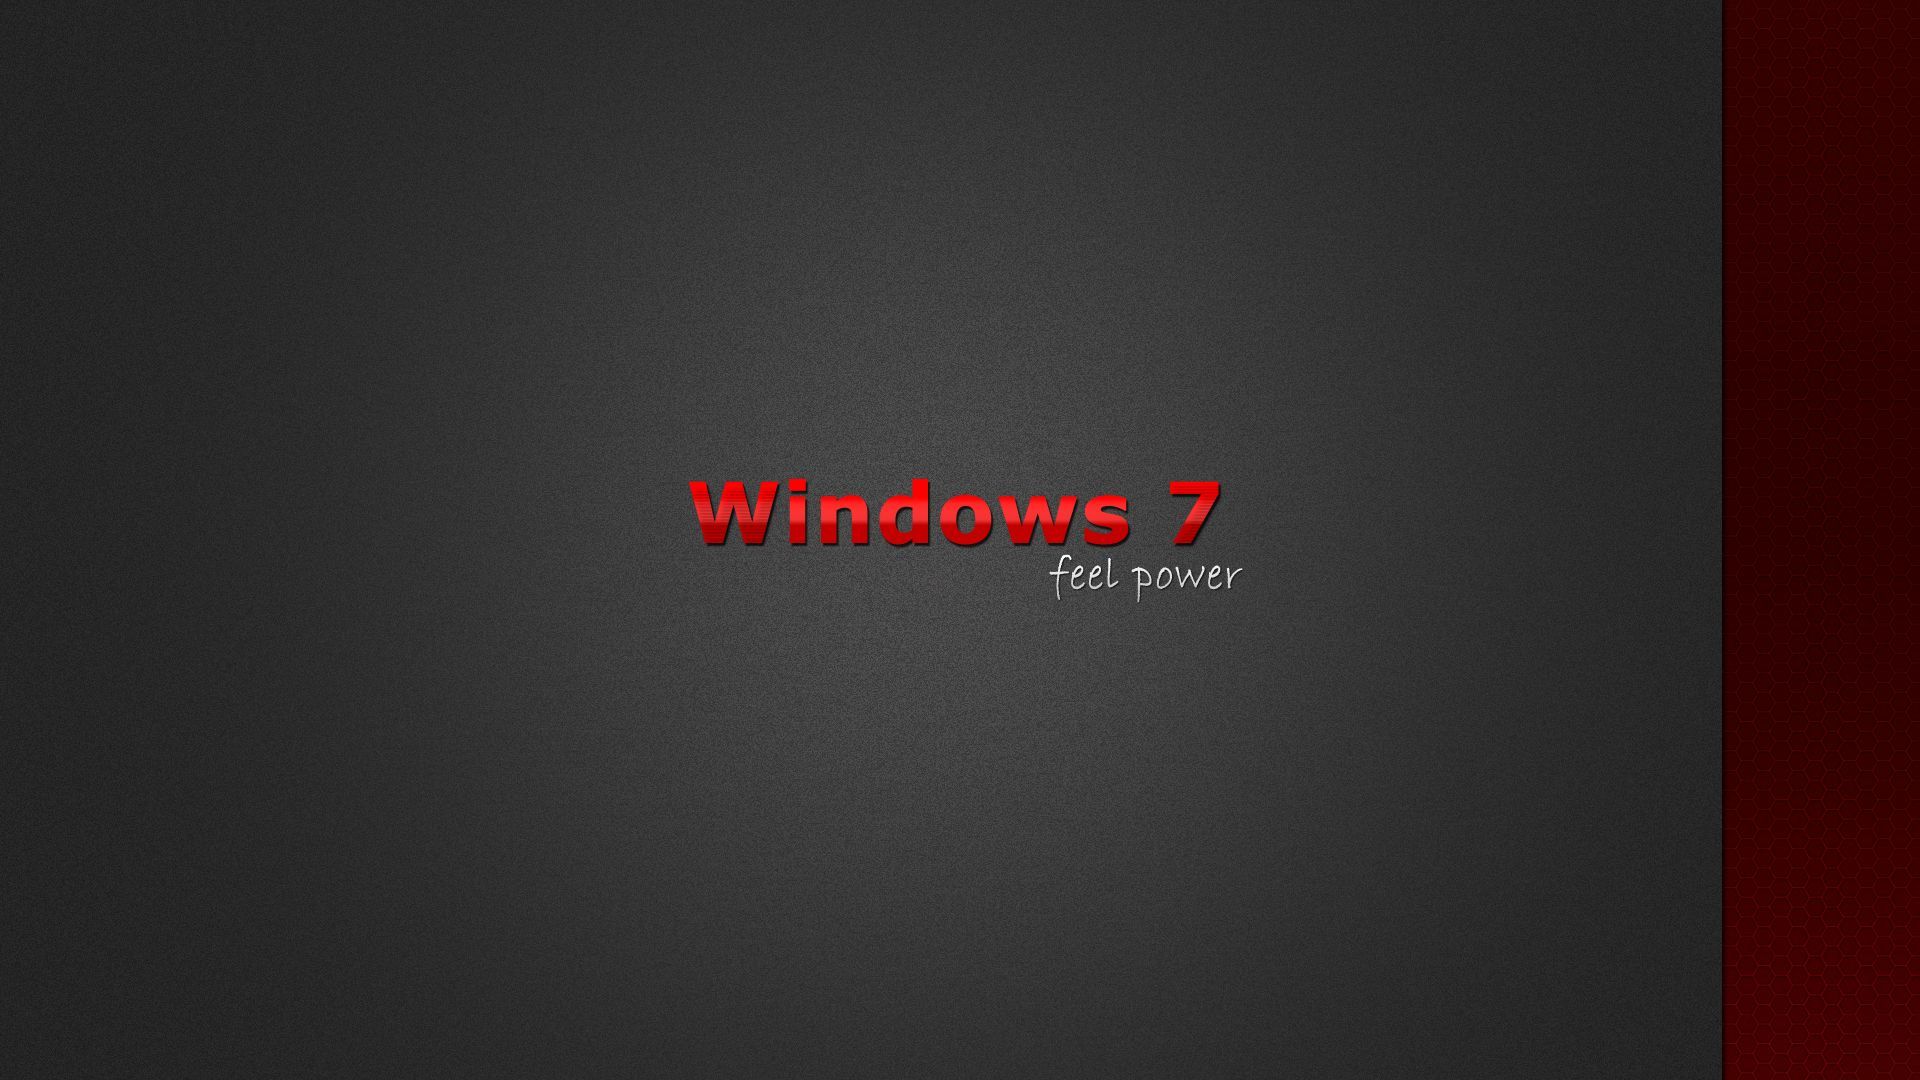 Windows 7 wallpaper FULL HD by harmonikas996 on DeviantArt